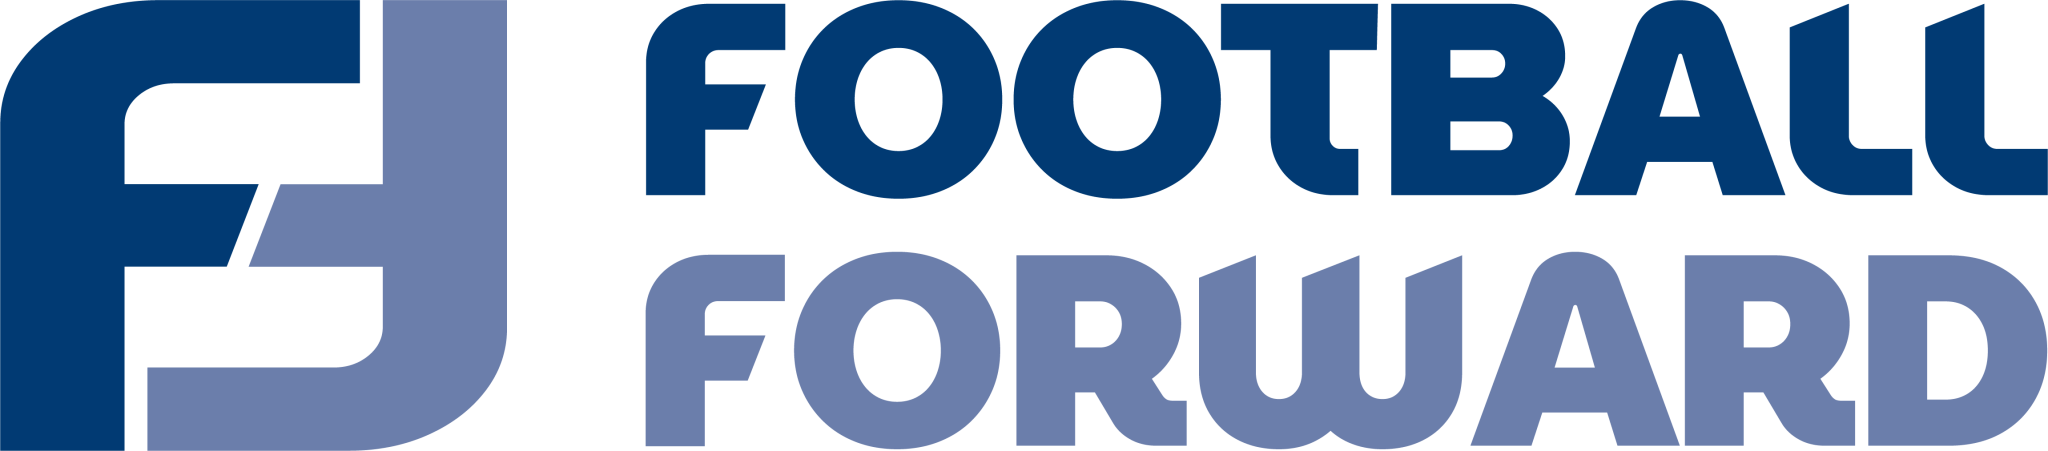 Football Forward Logo